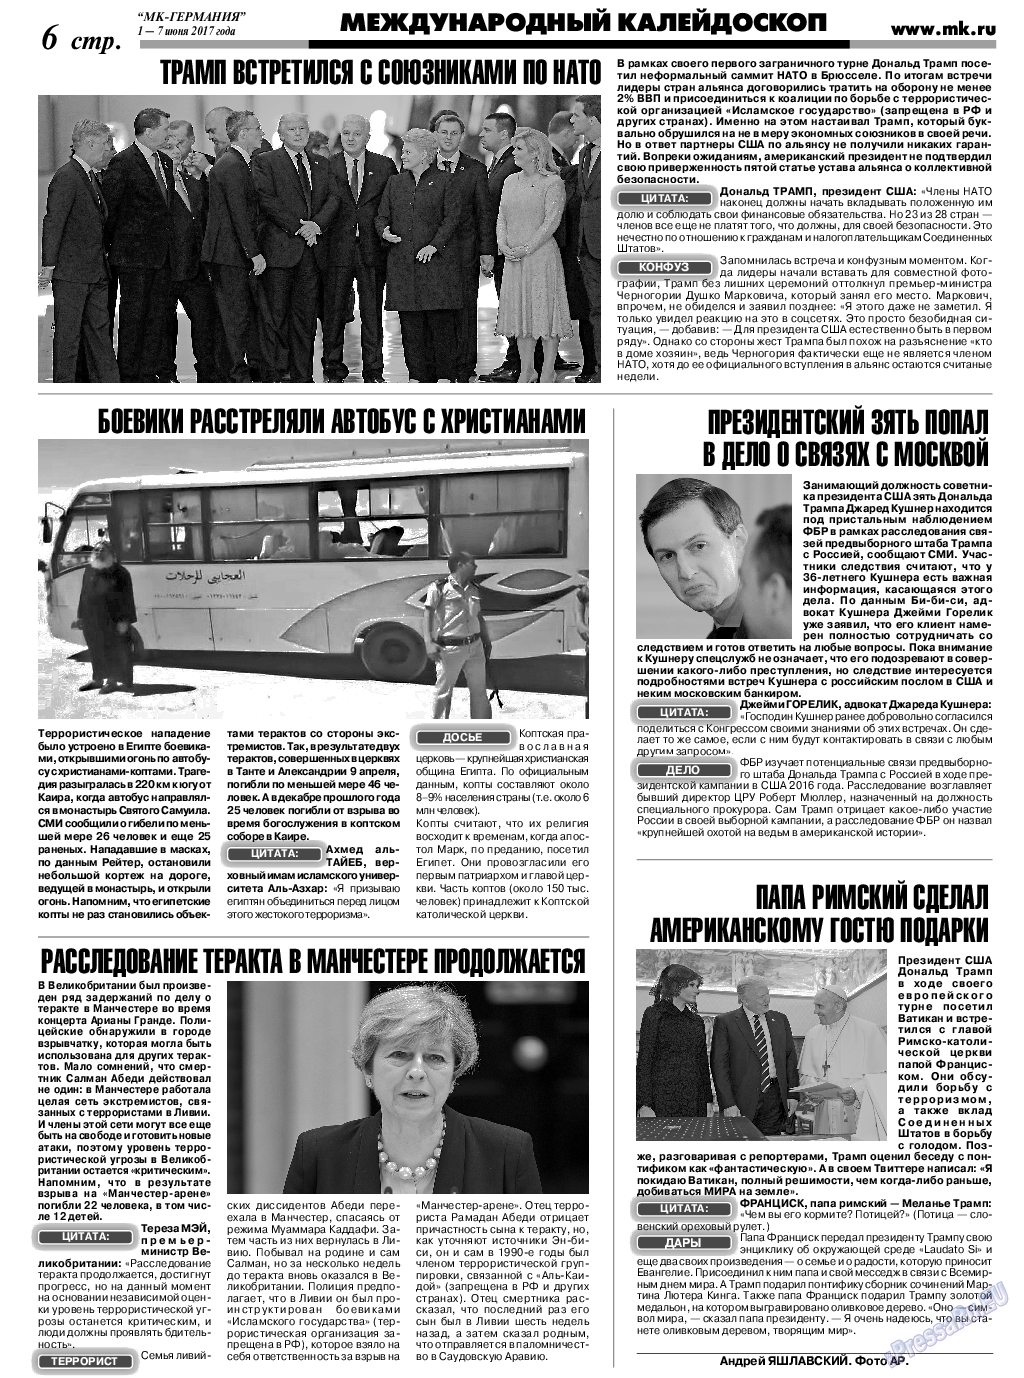 МК-Германия, газета. 2017 №23 стр.6